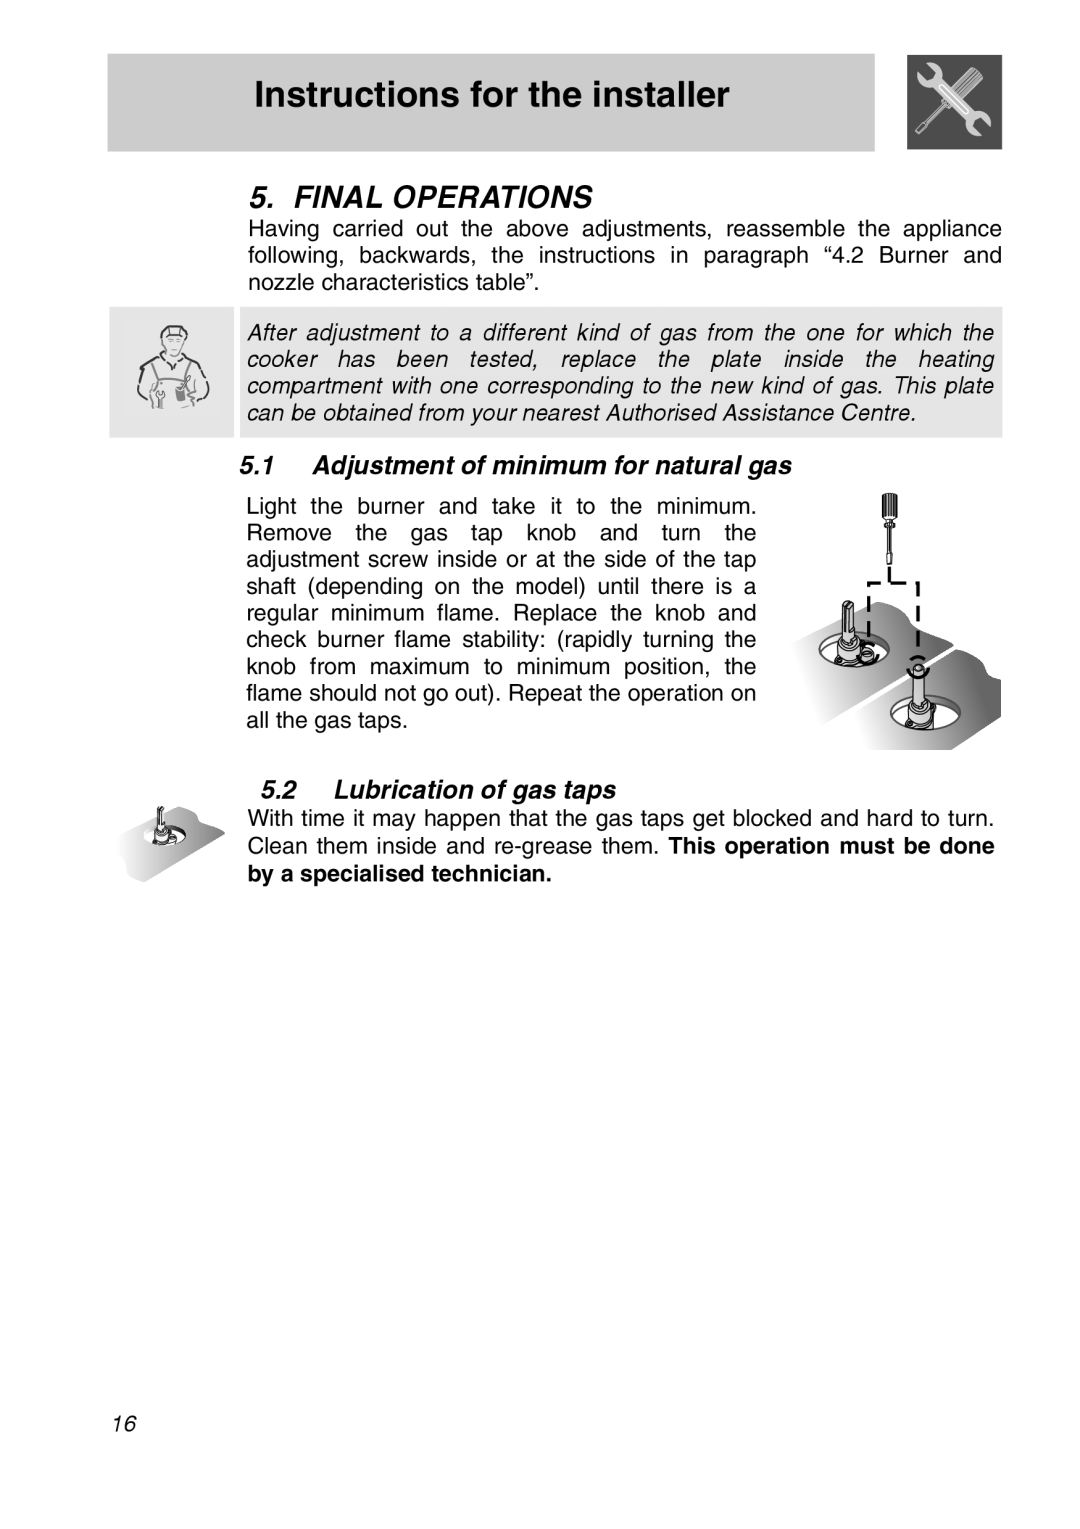 Smeg PGA95SC3, PGA95F3 manual Final Operations, Instructions for the installer, 5.1Adjustment of minimum for natural gas 